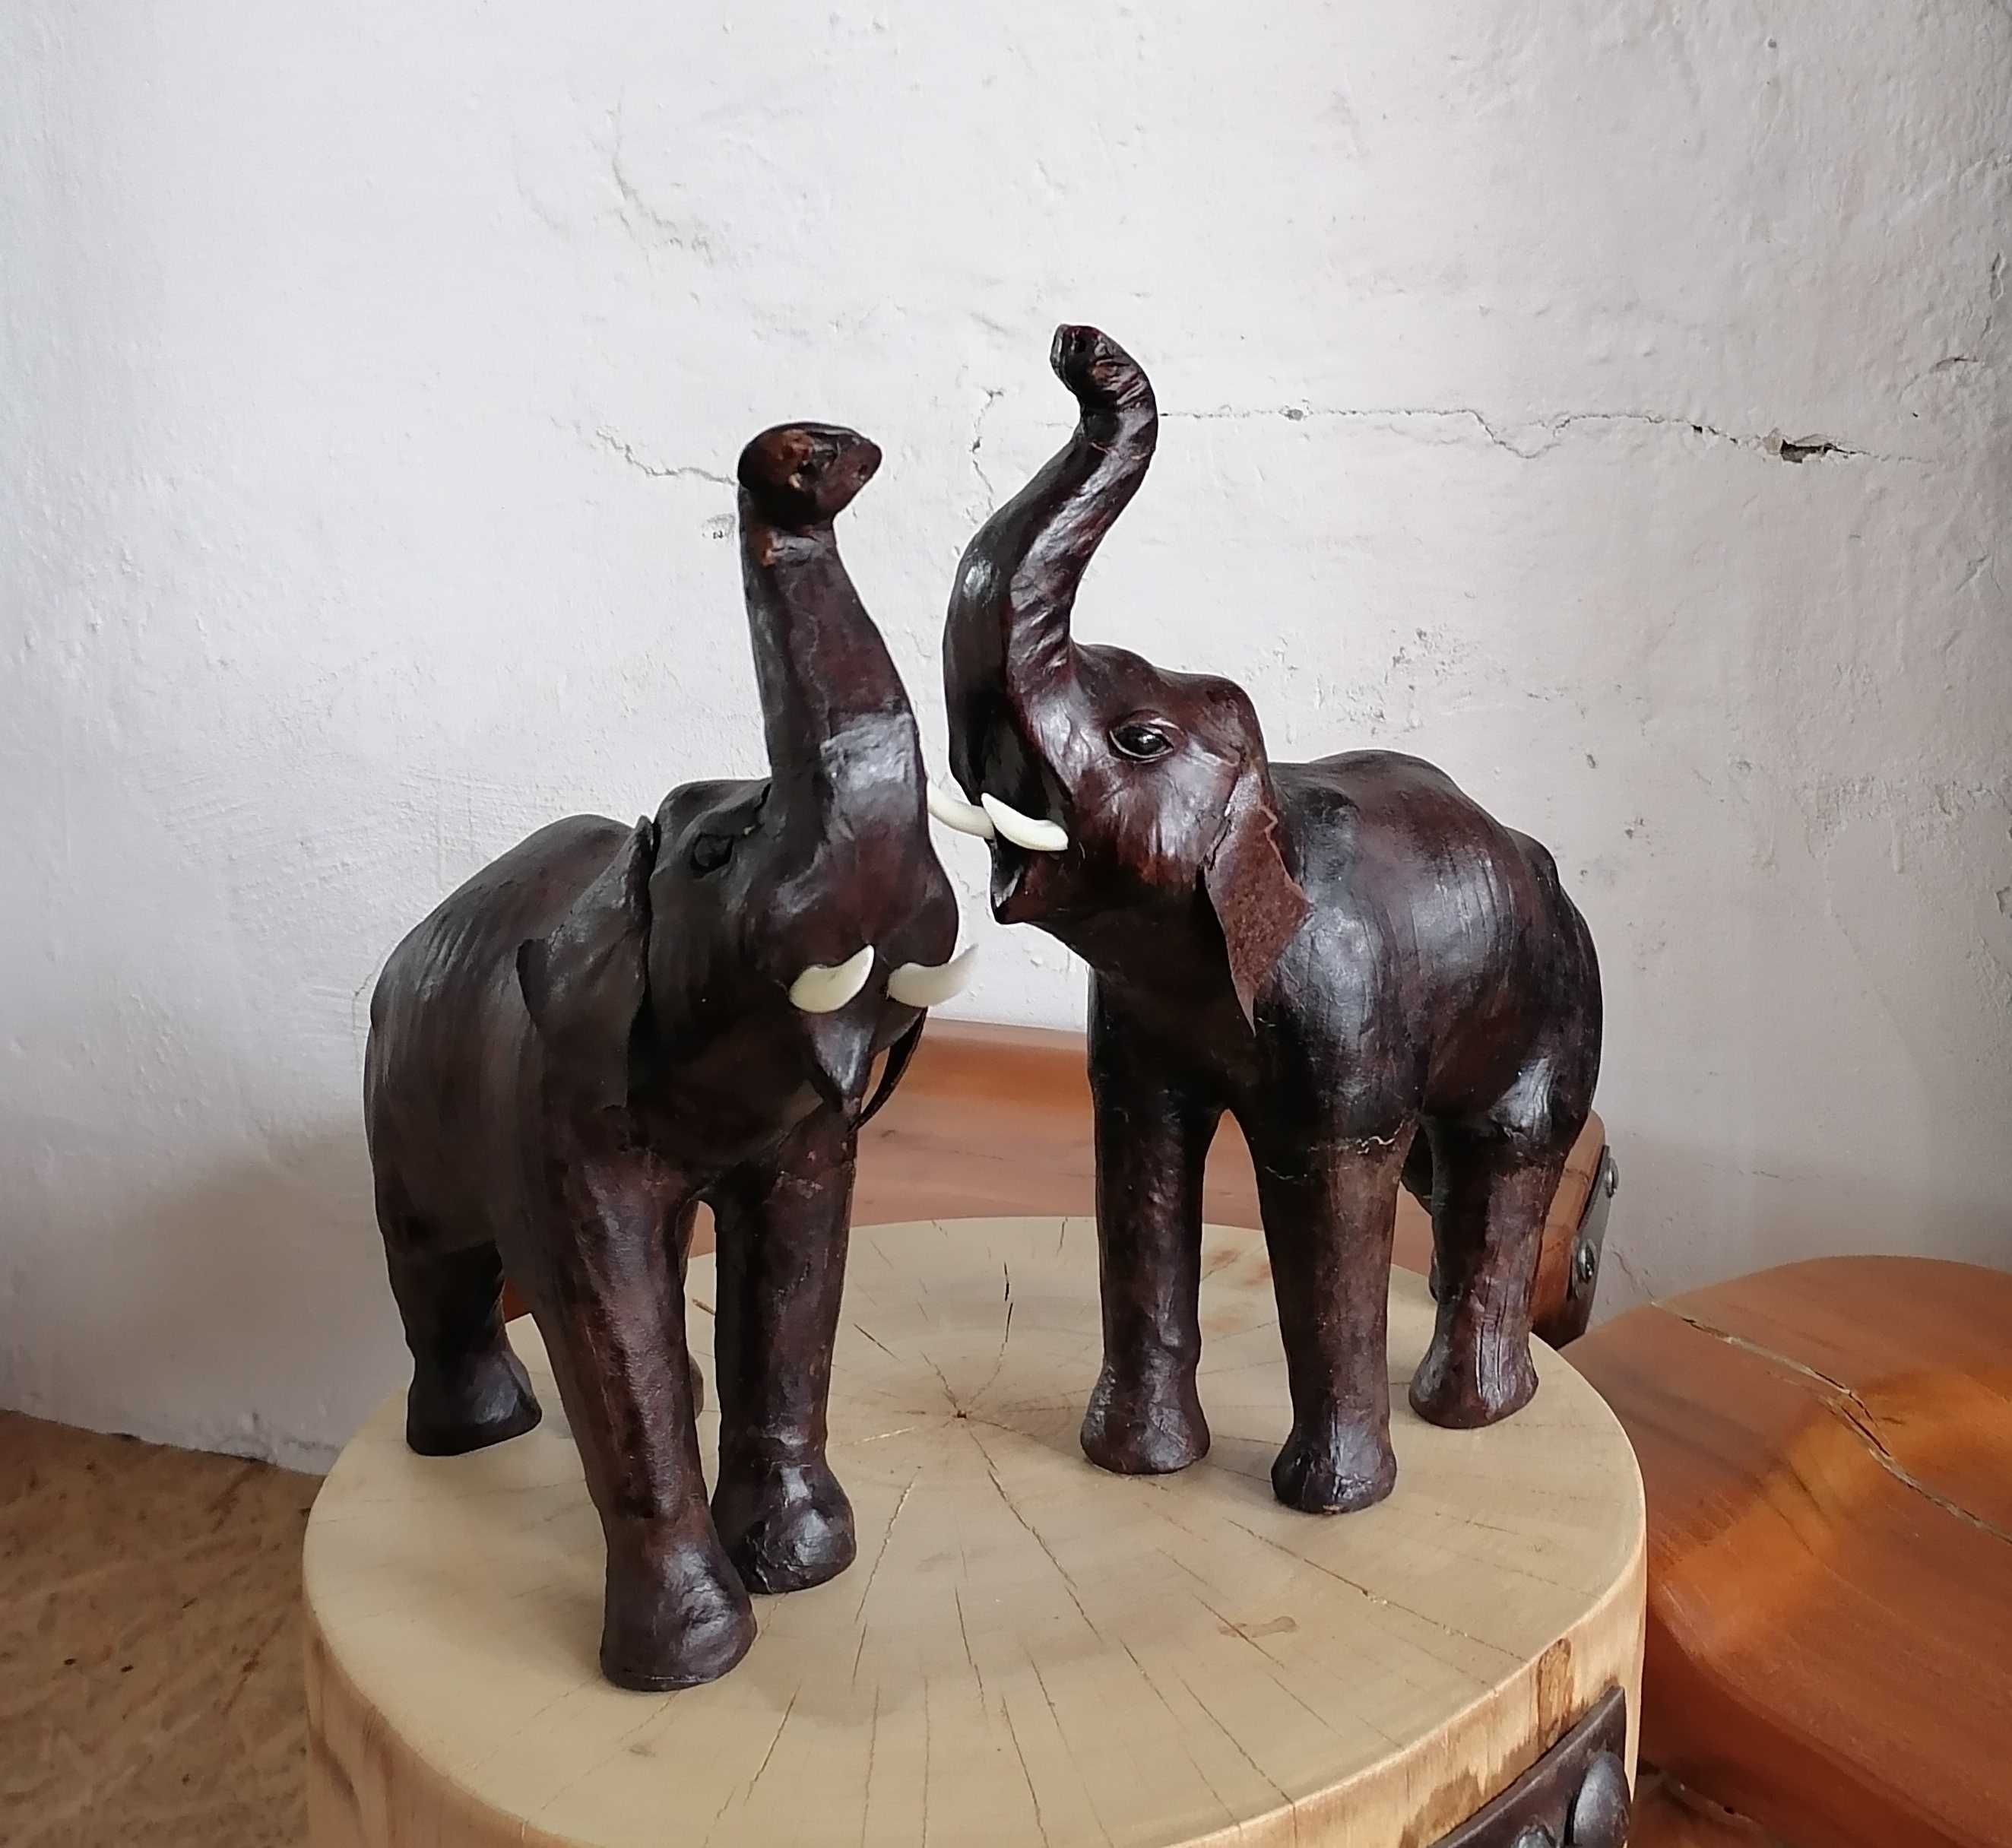 Elefanti vechi  piele naturala /Obiecte decorative / Recuzita